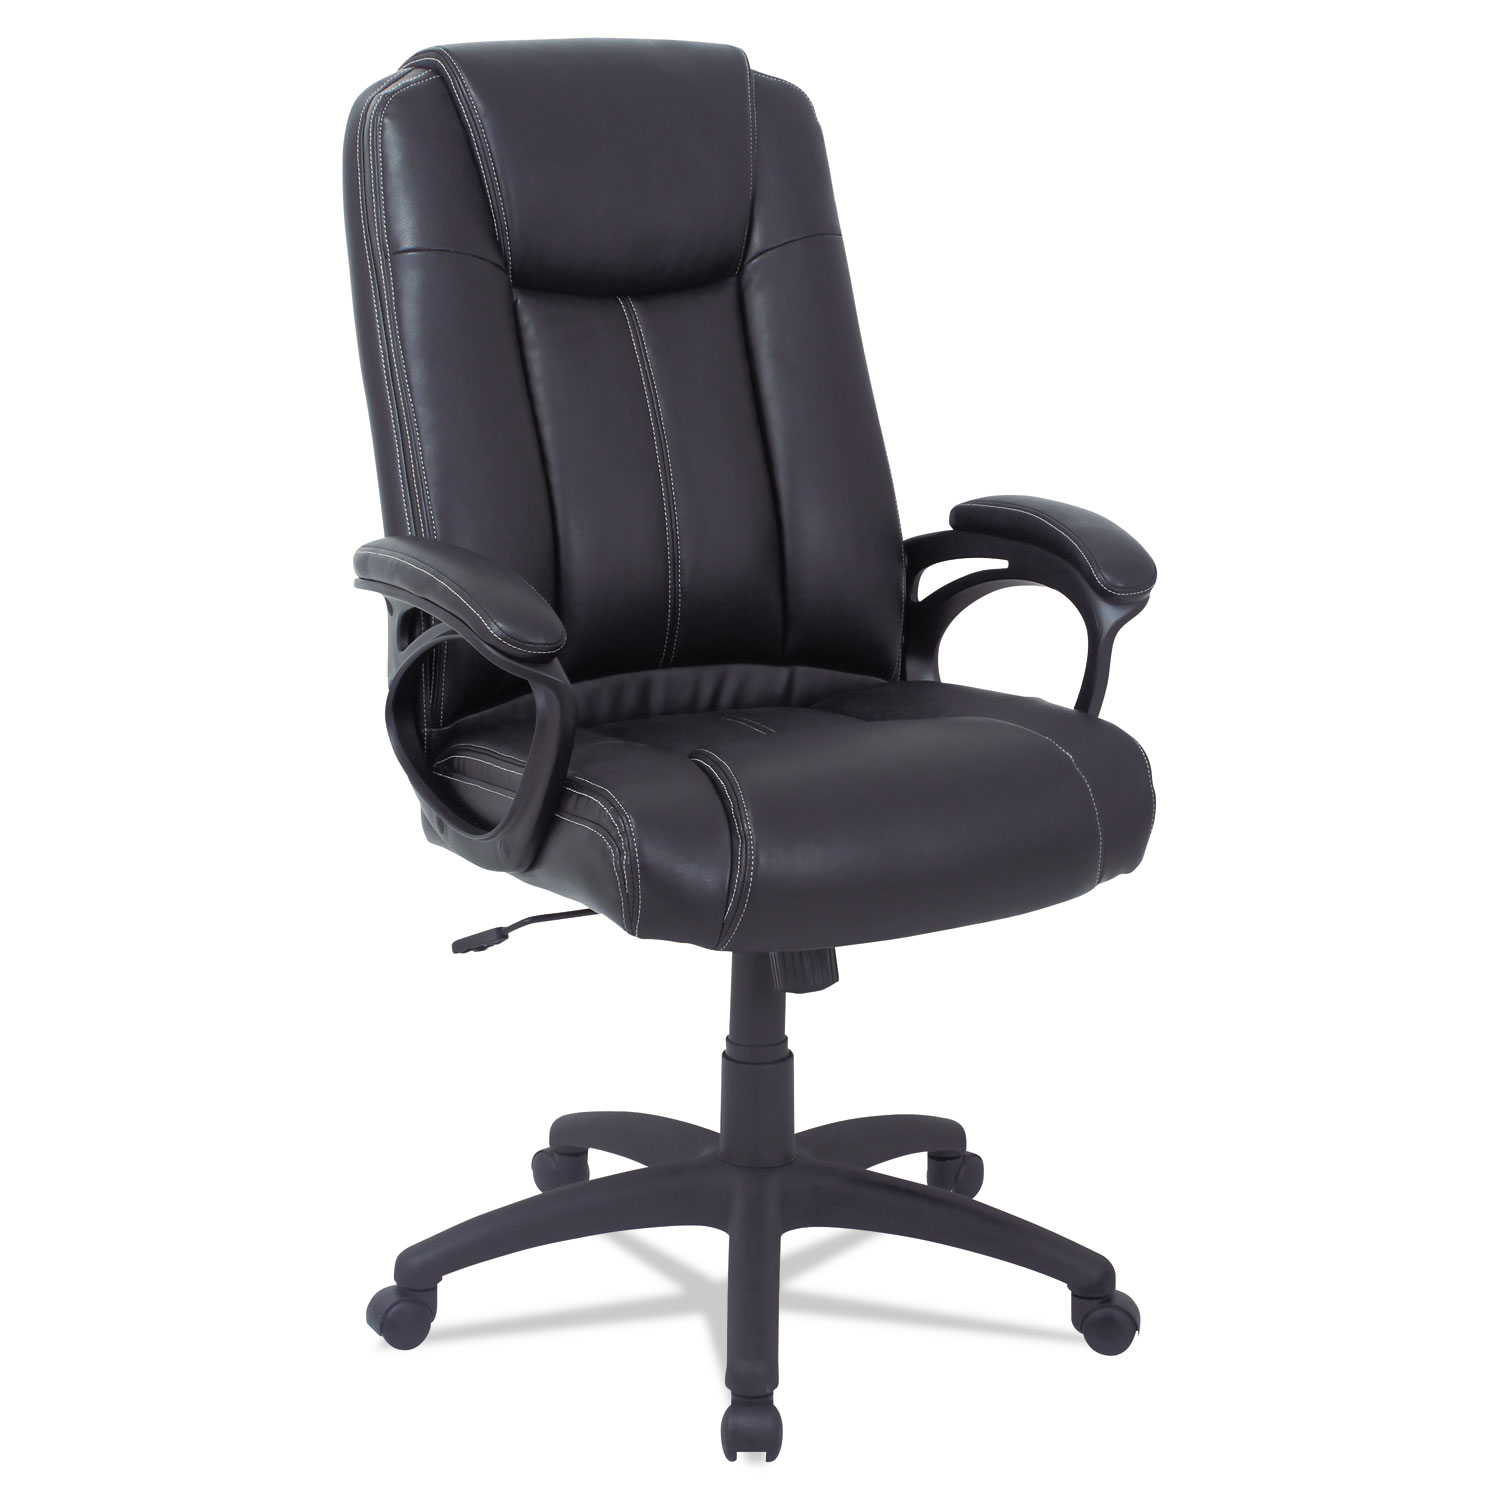  Alera ALECC4119F Alera CC Series Executive High Back Leather Chair, Supports up to 275 lbs., Black Seat/Black Back, Black Base (ALECC4119F) 